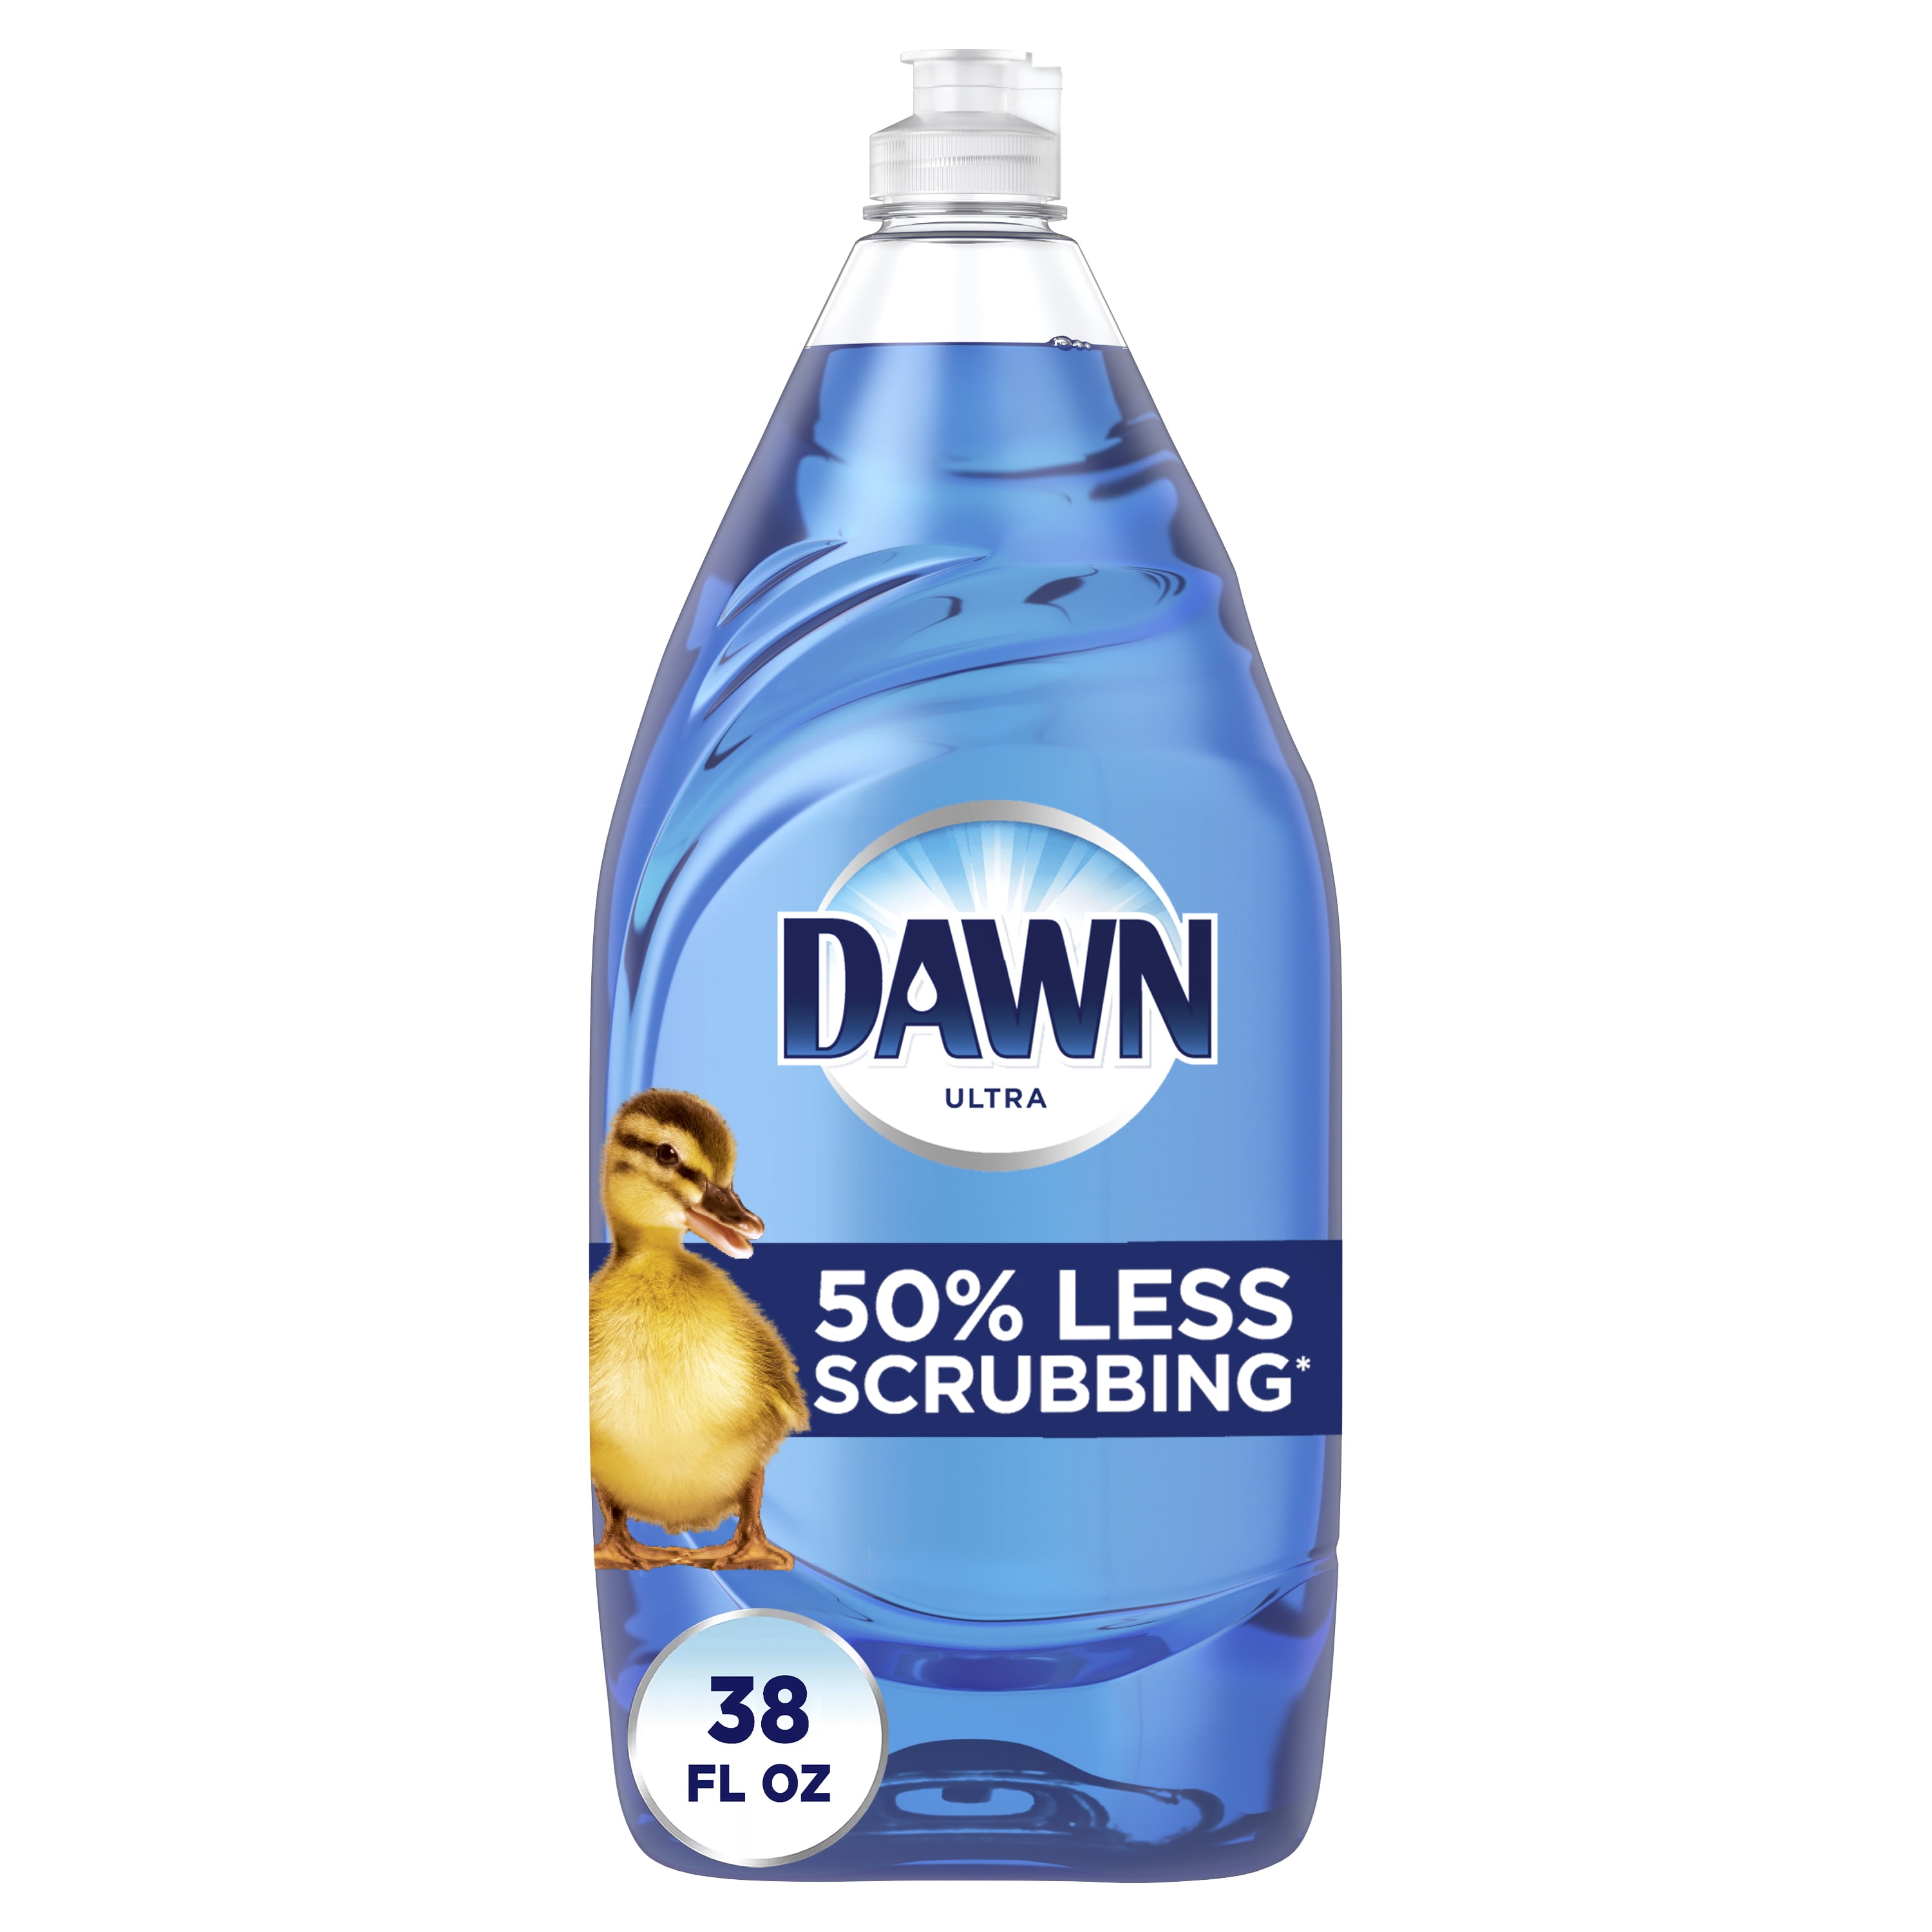 Dawn Ultra Dish Soap Dishwashing Liquid Original Scent 38 Fl Oz More Options Available